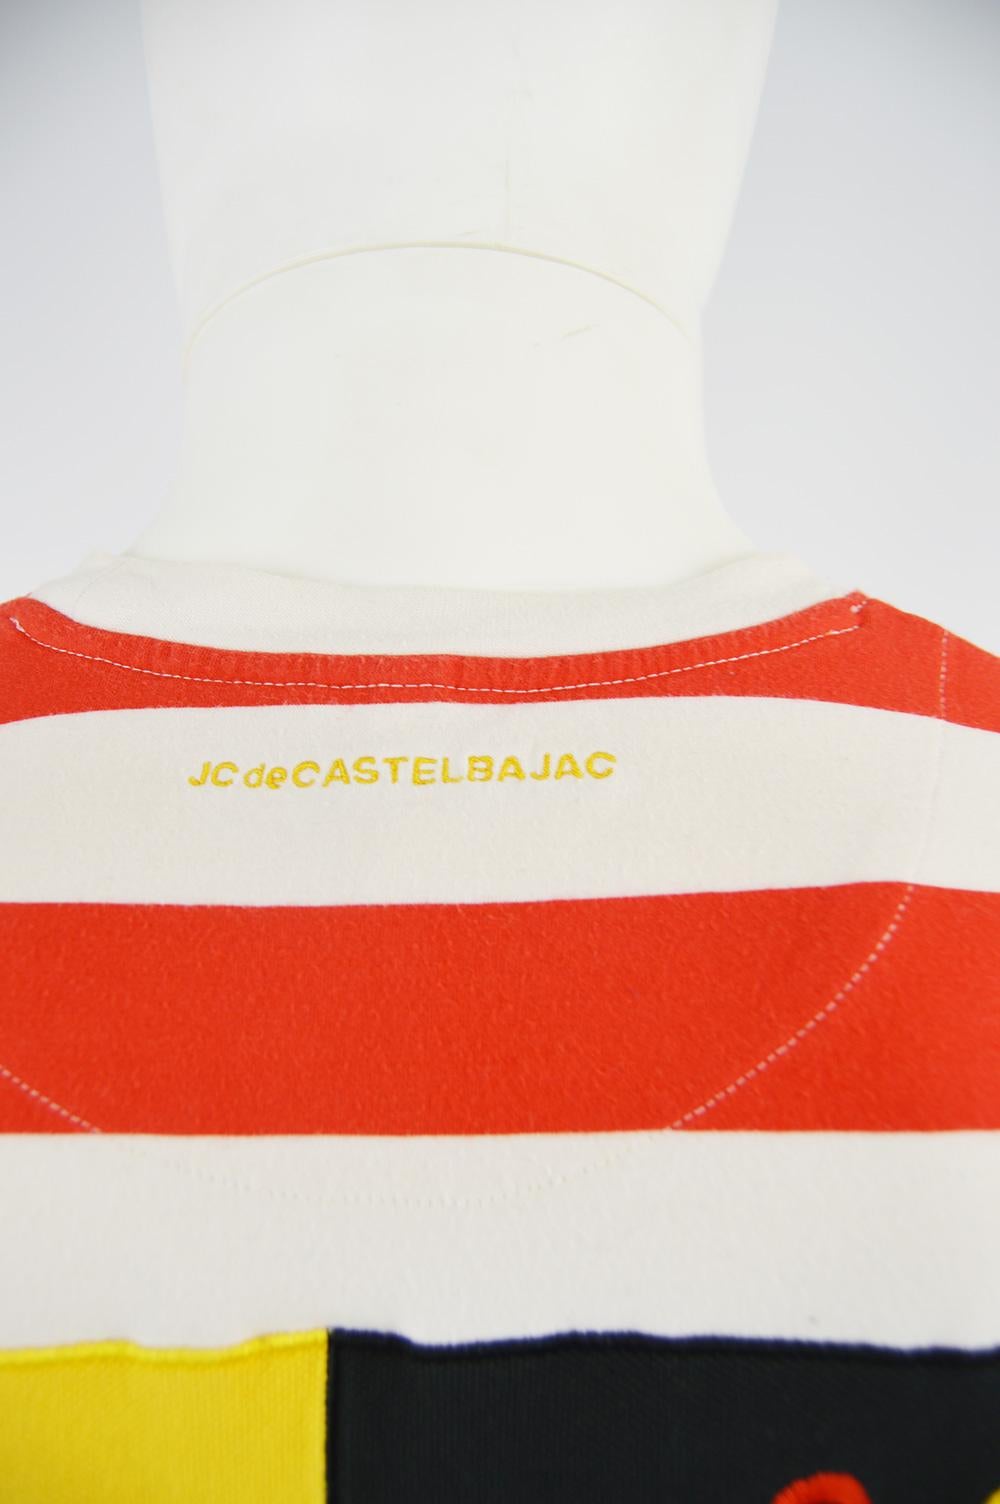 Jean Charles de Castelbajac Felix the Cat Men's Red & White Short Sleeve T Shirt 1